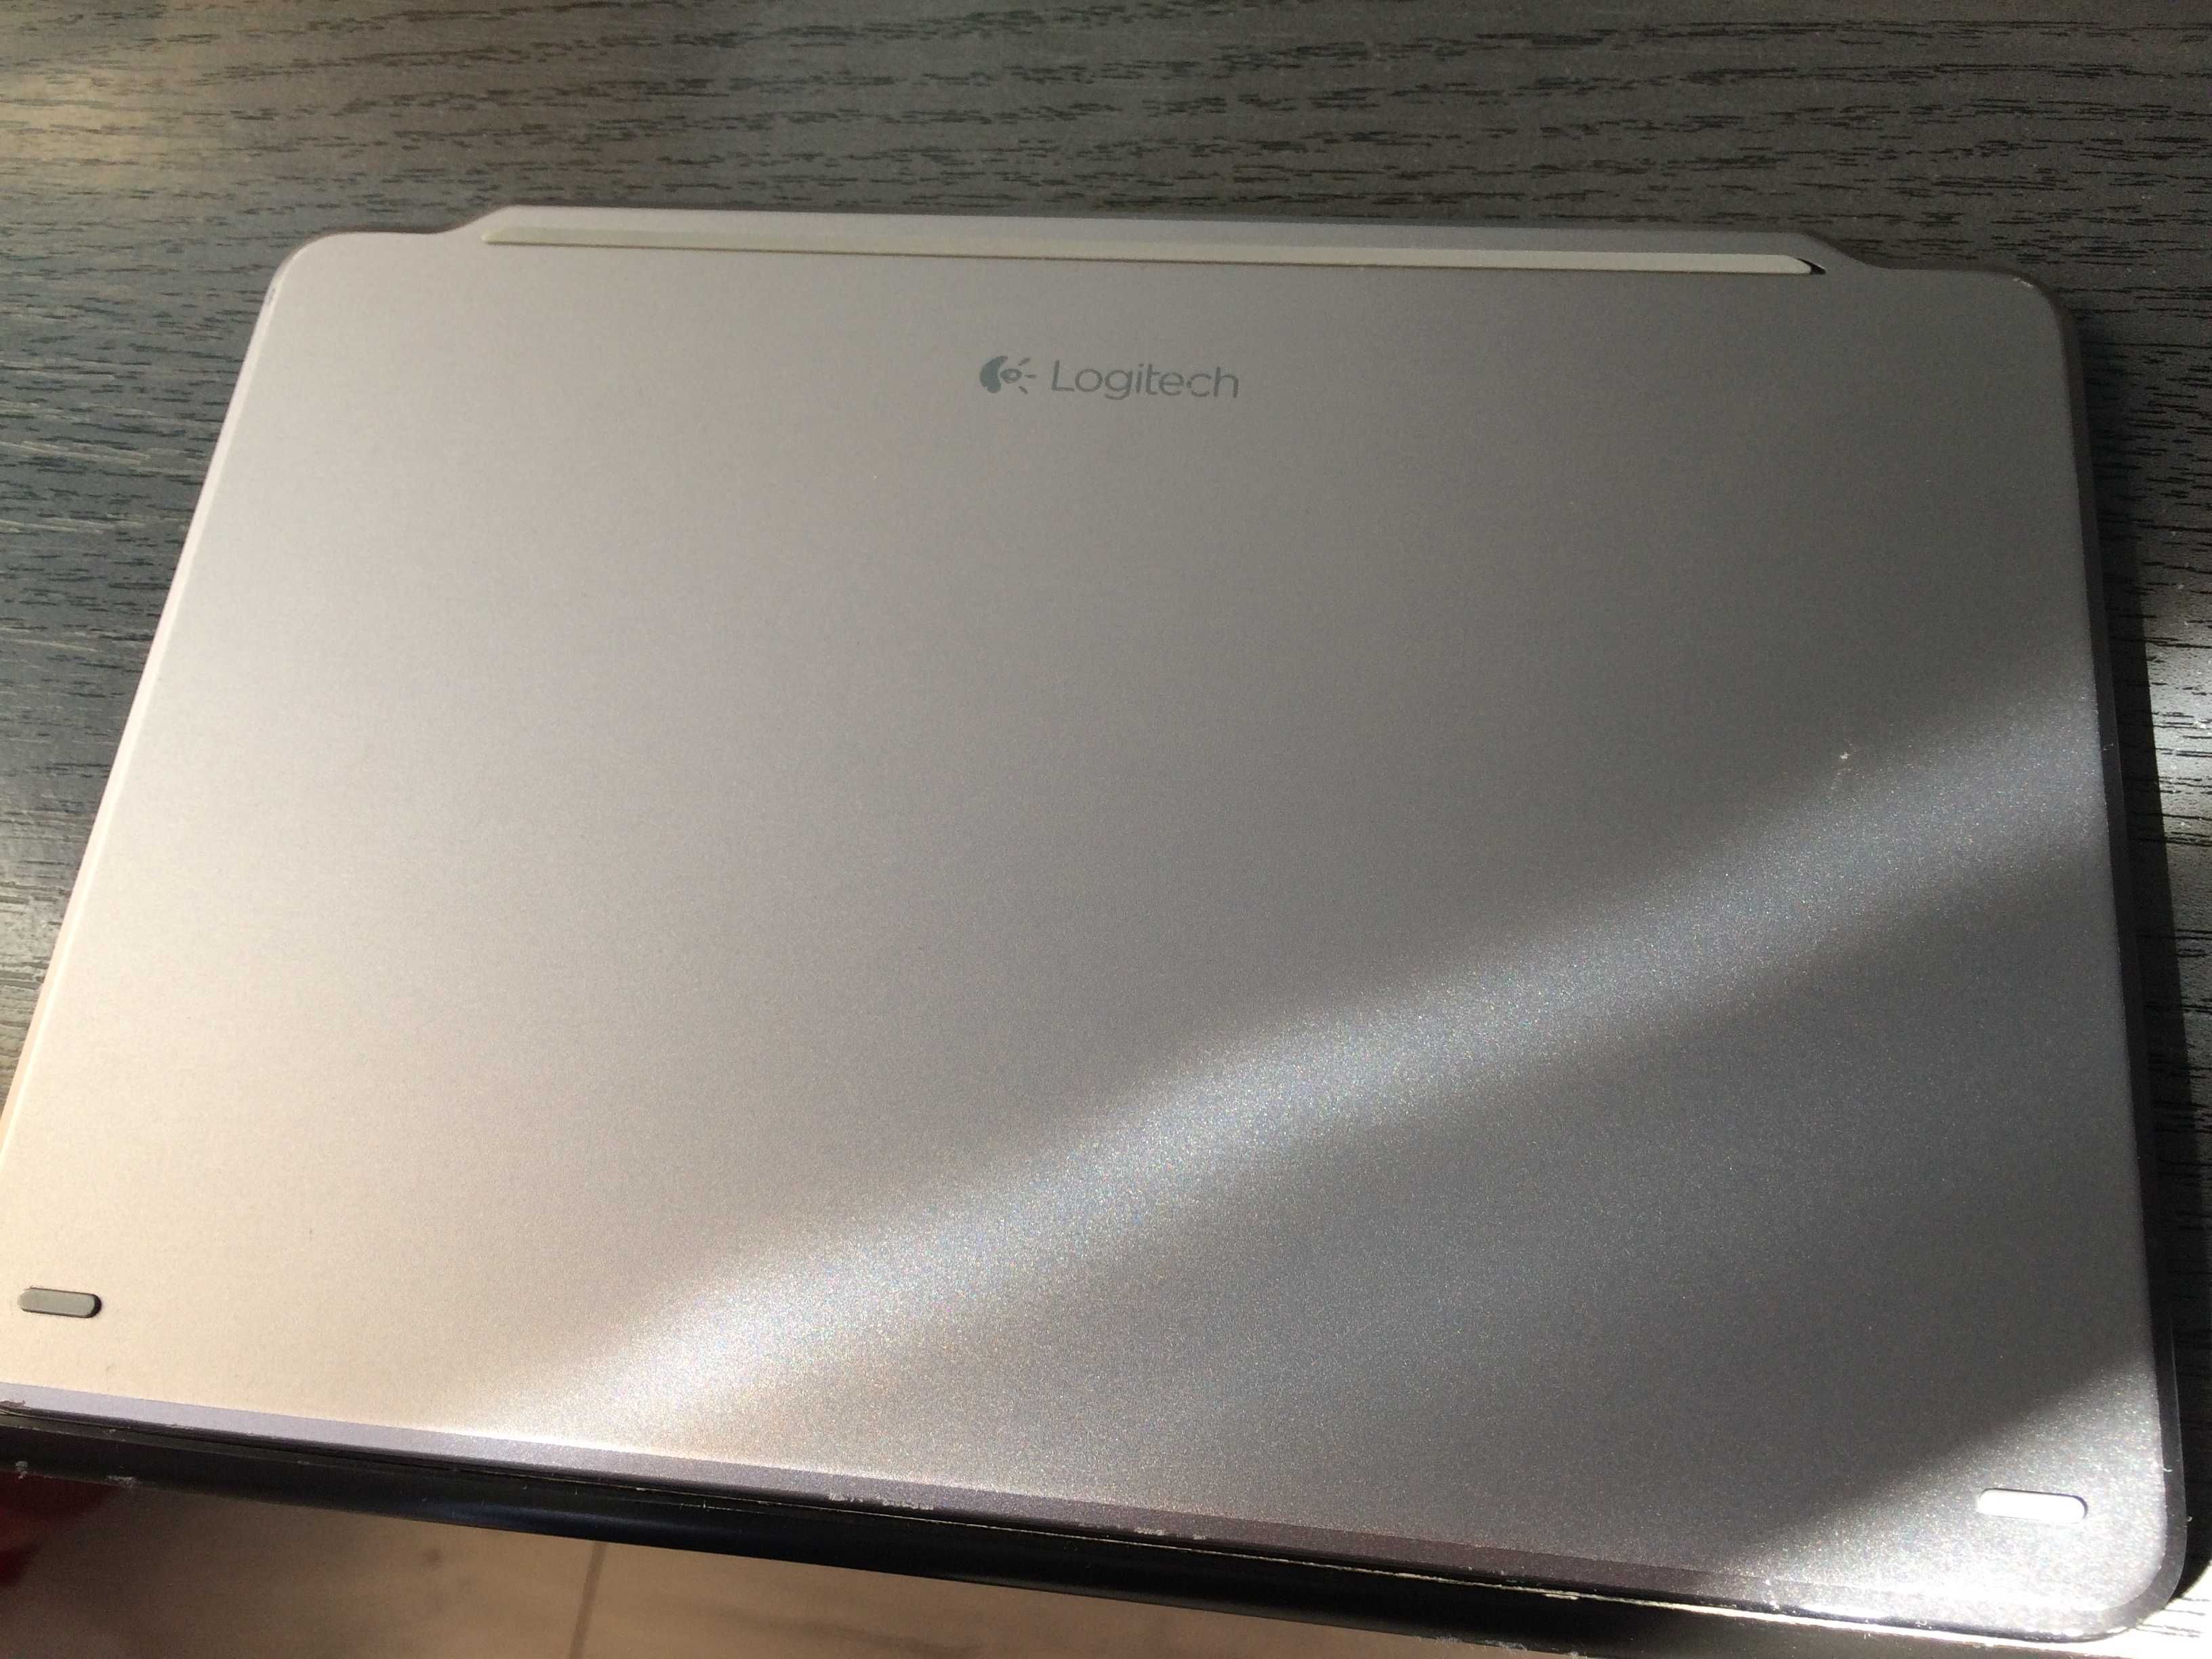 Tastatura bluetooth Logitech UltraThin model Y-R0048 pentru Ipad.